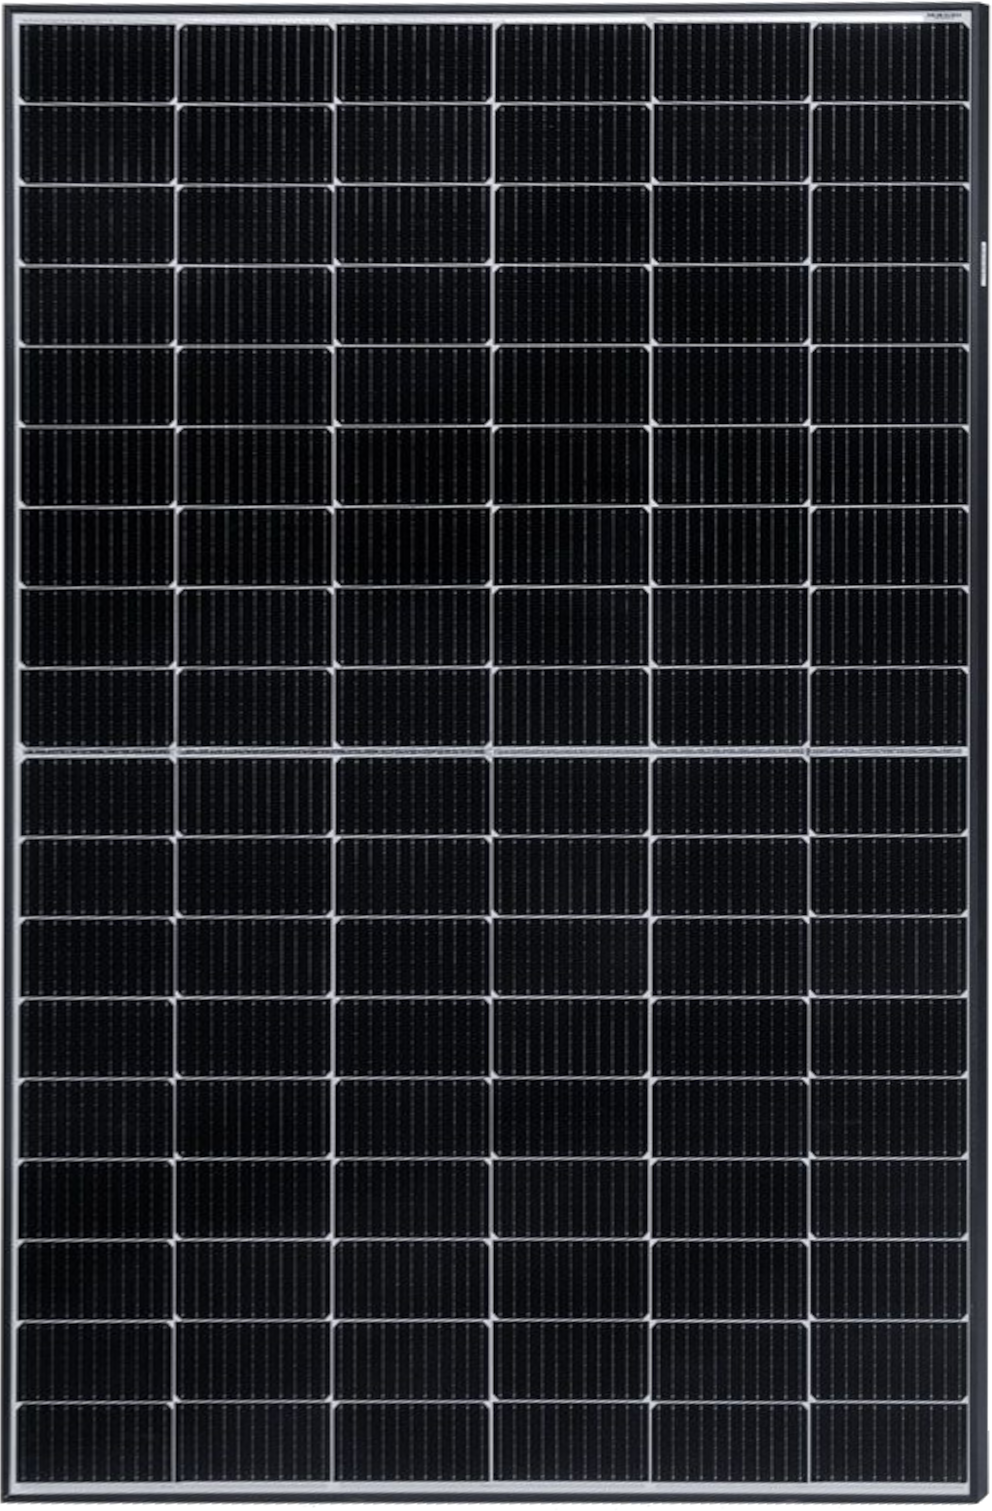 JA Solar JAM54D40-435/LB 435W Solarmodule Solarpanel PV Module Doppelglas